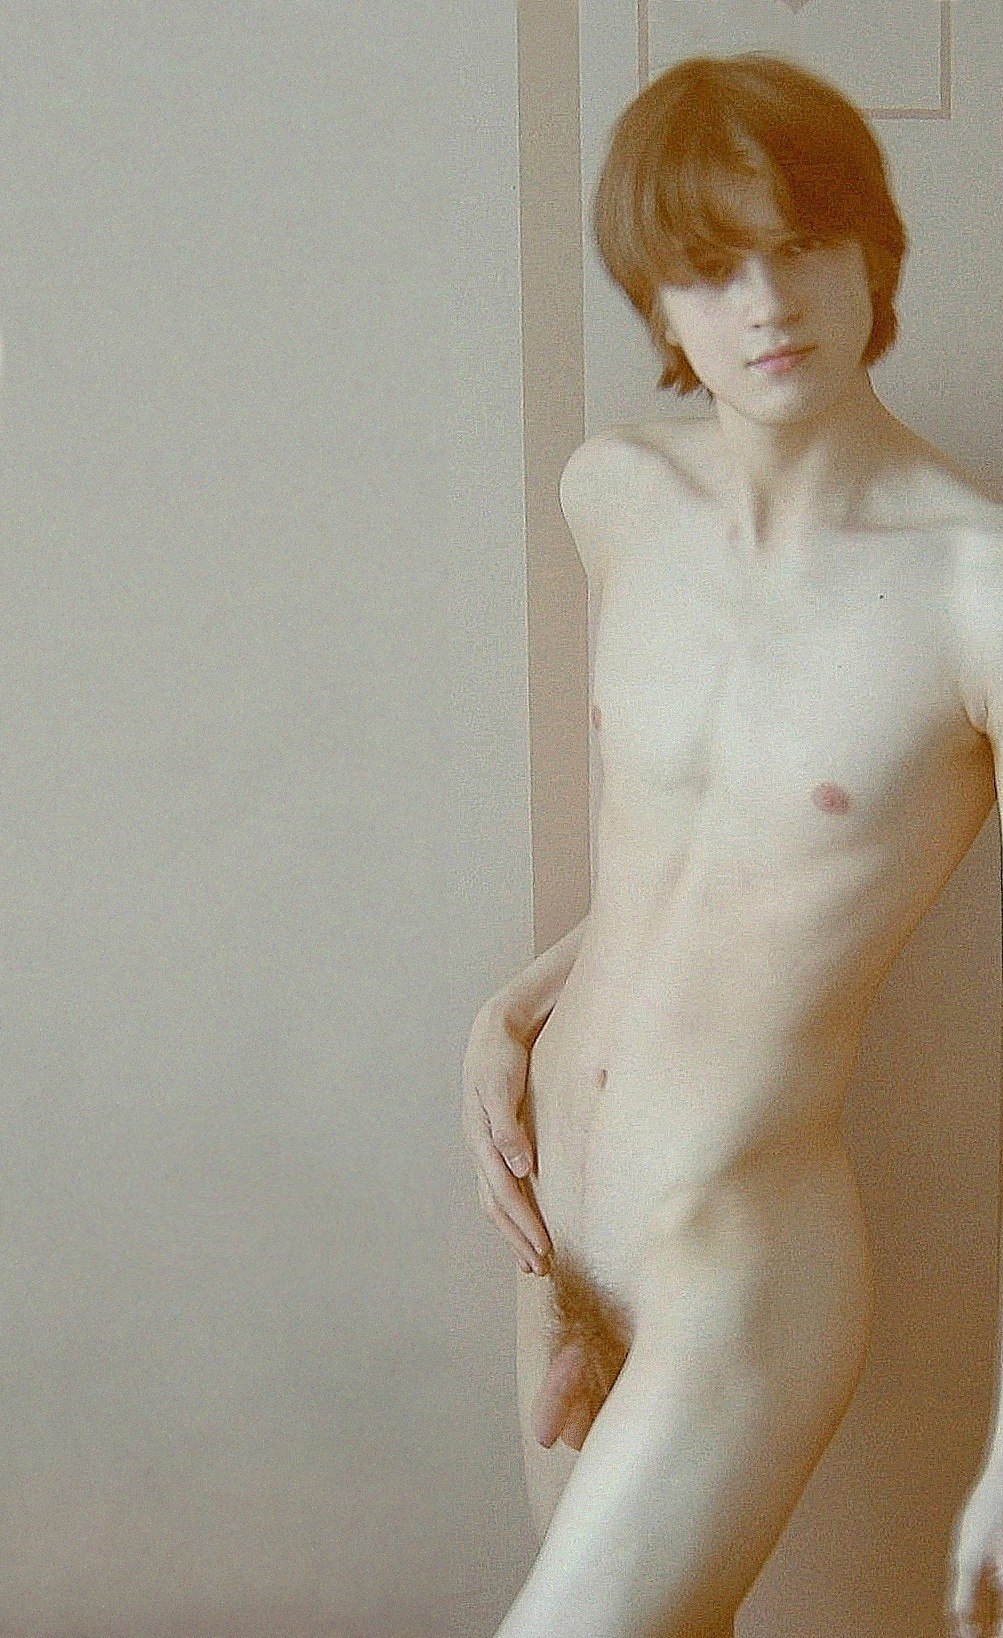 night photo of naked boy posing nude